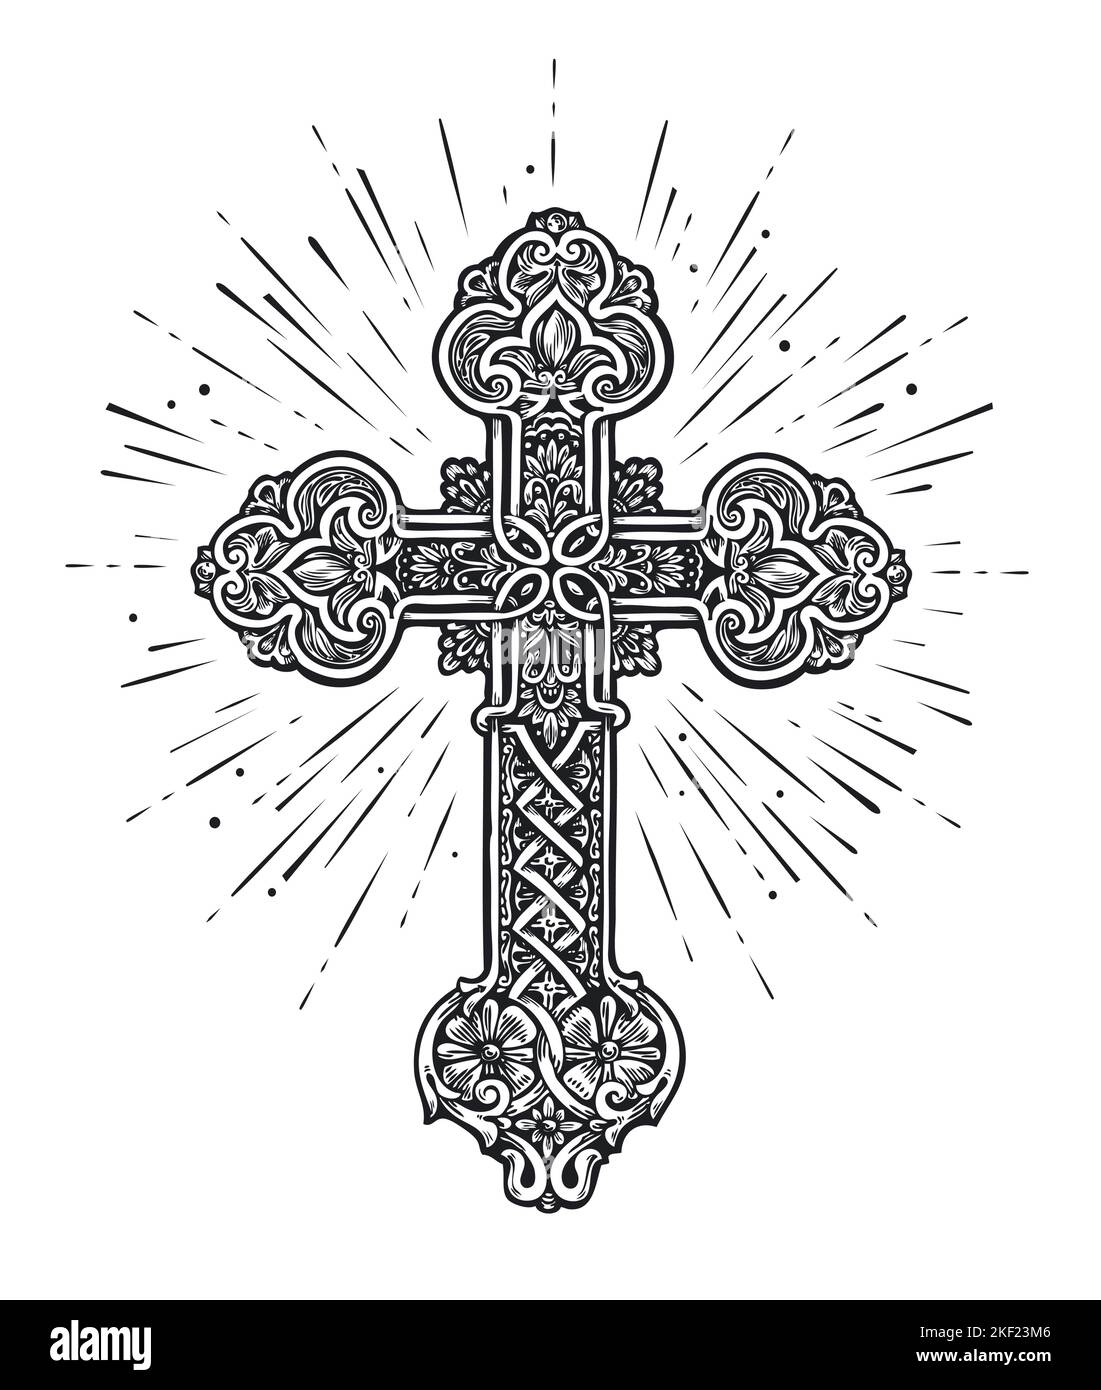 Verzierte Christliche Kreuz. Kirche, Glaube an Gott, Christentum Religion Symbol. Illustration im Vintage-Gravurstil Stock Vektor